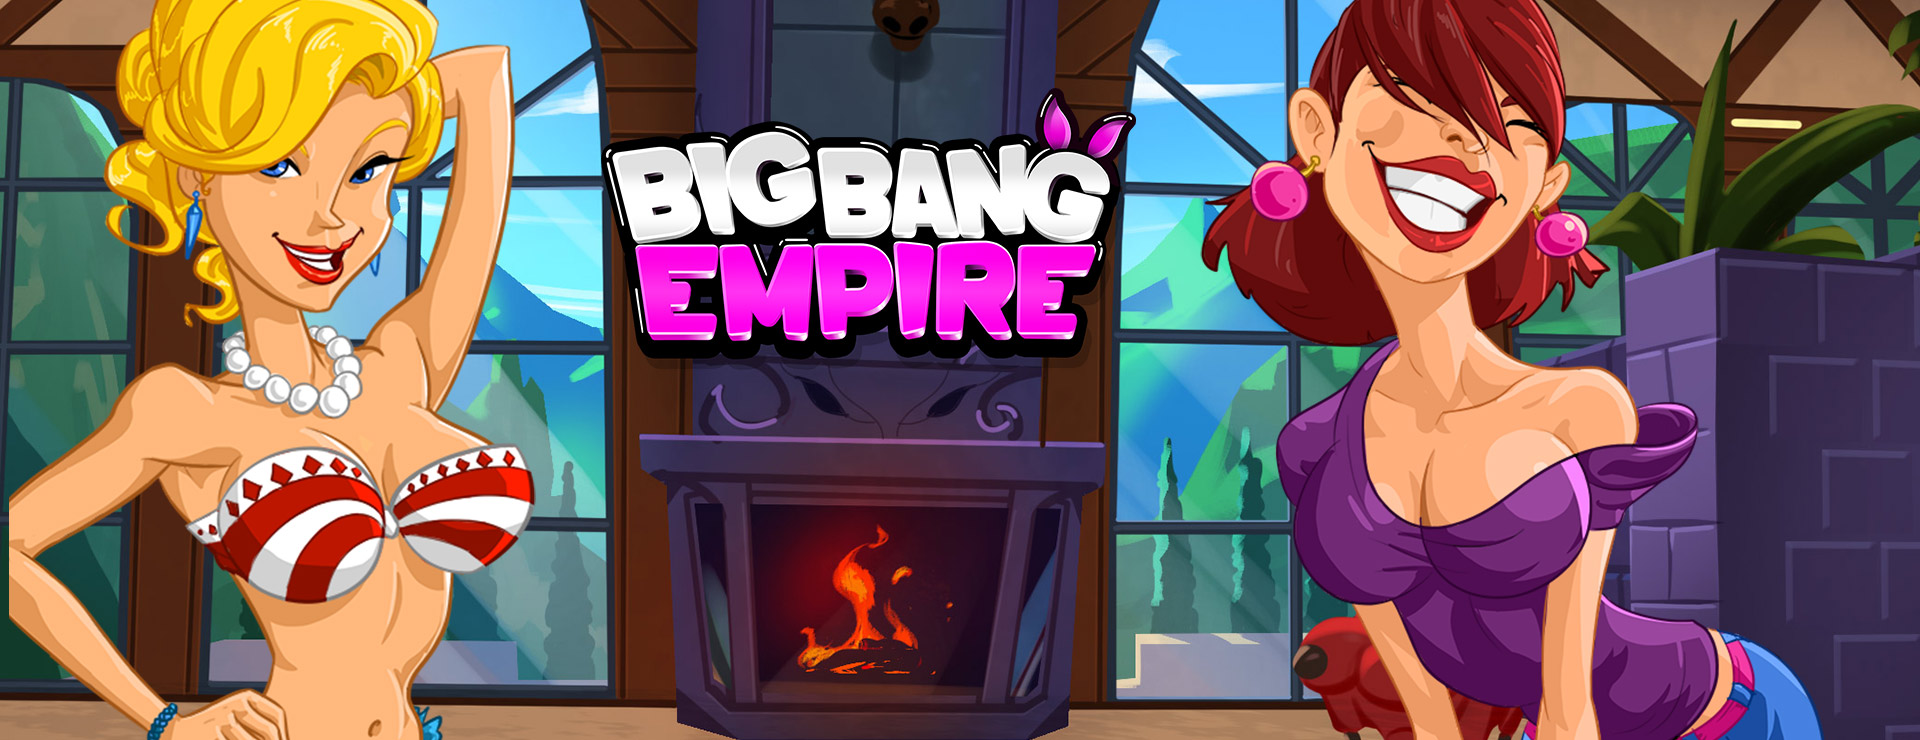 Big Bang Empire Online - RPG Spiel